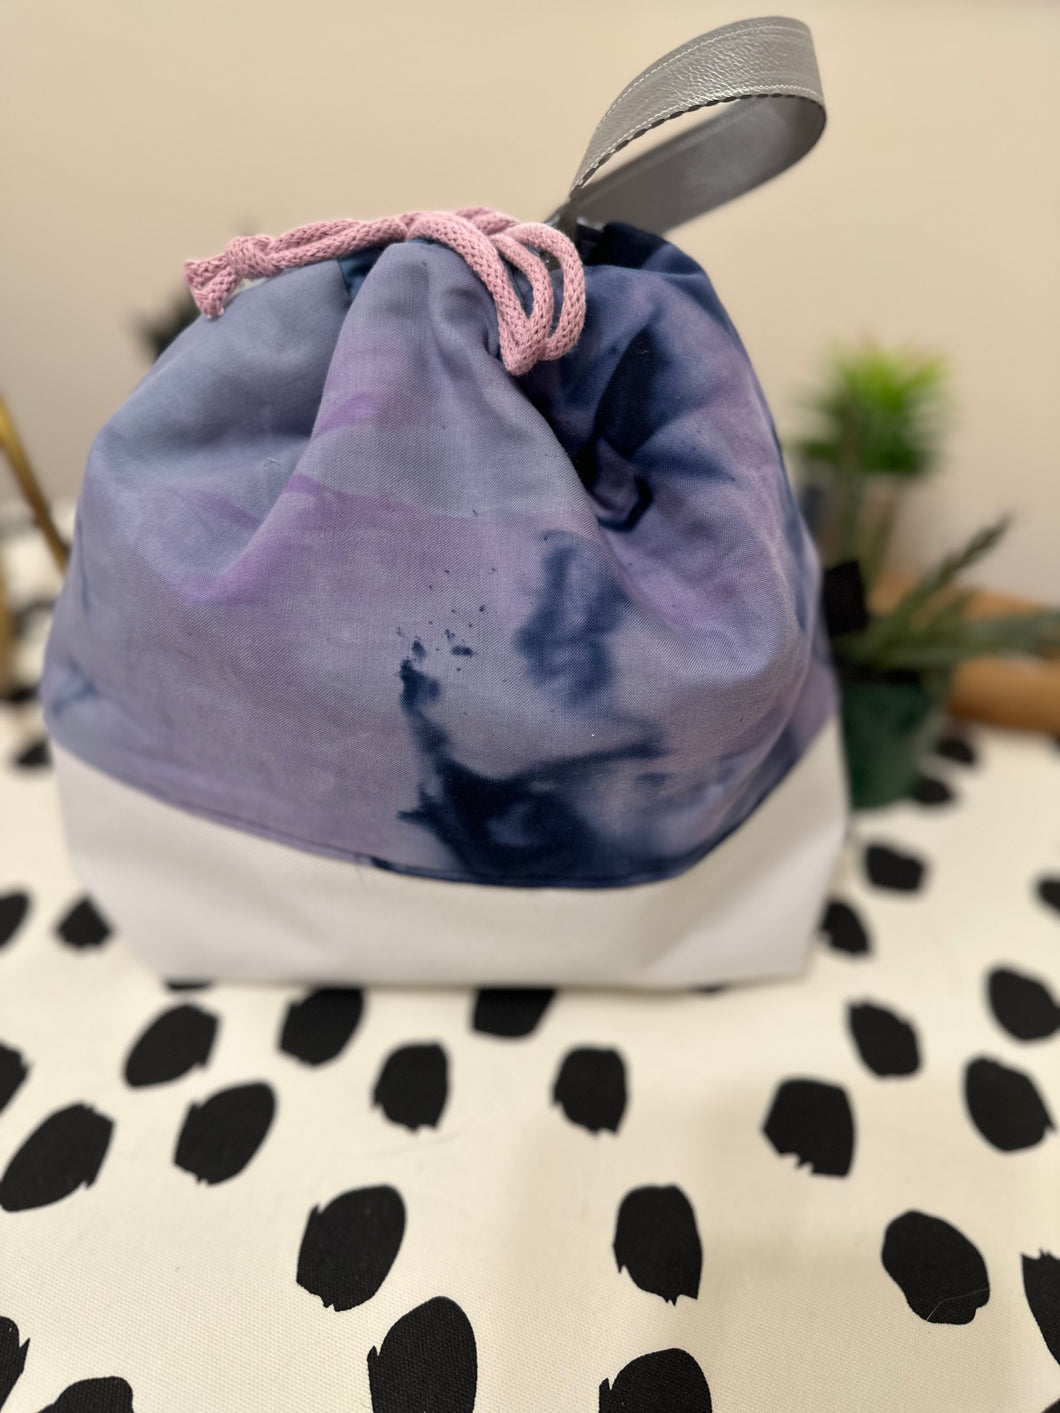 HandDyed Fabric Drawstring Bag (Dark-Purple)